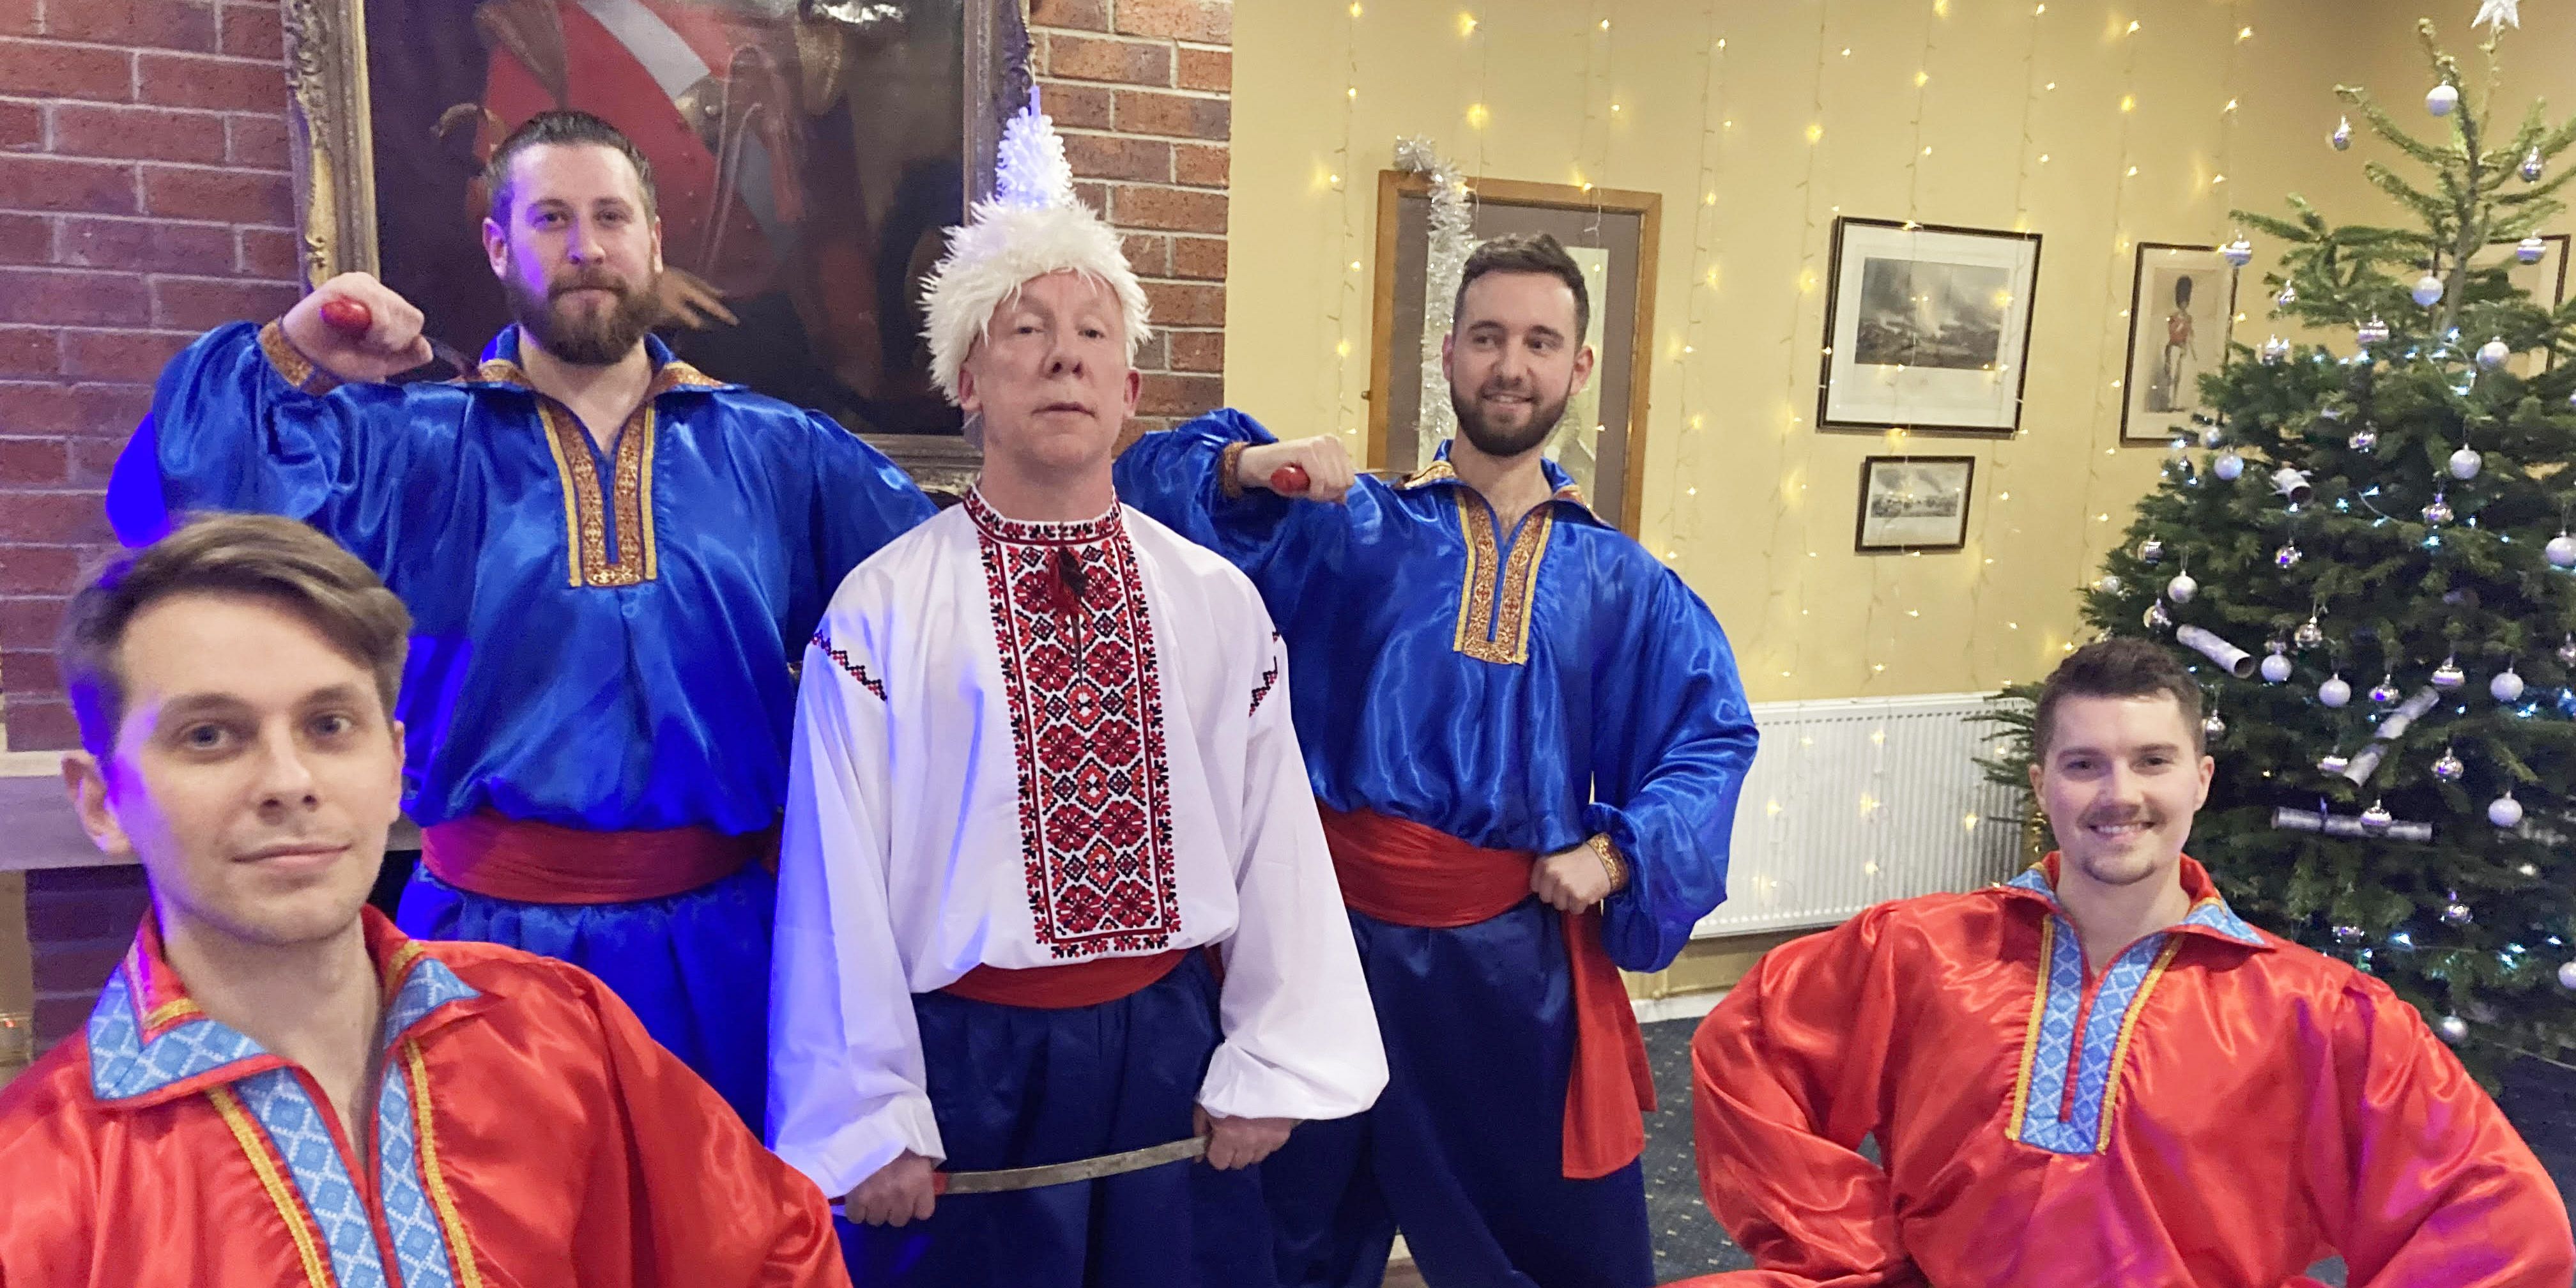 Ukrainian Cossack Dancers Bring Festivities to Harrogate Christmas Bash